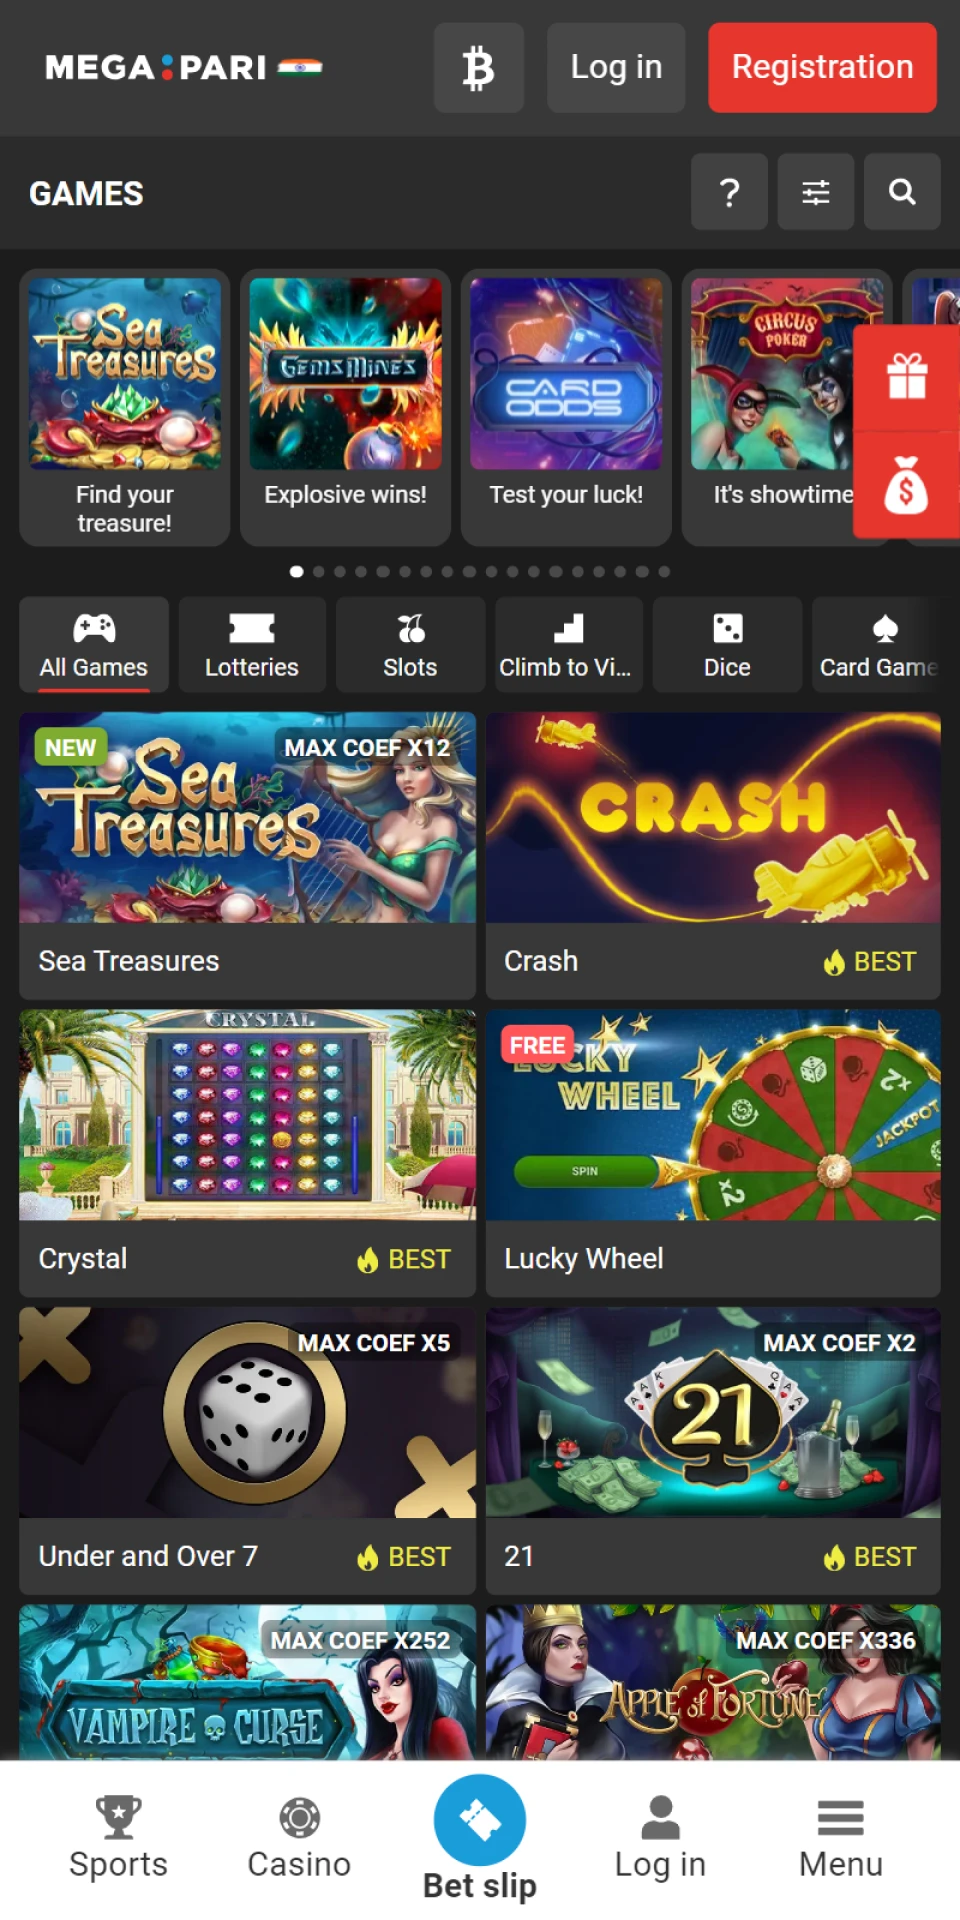 Play at the casino using the Megapari mobile app.